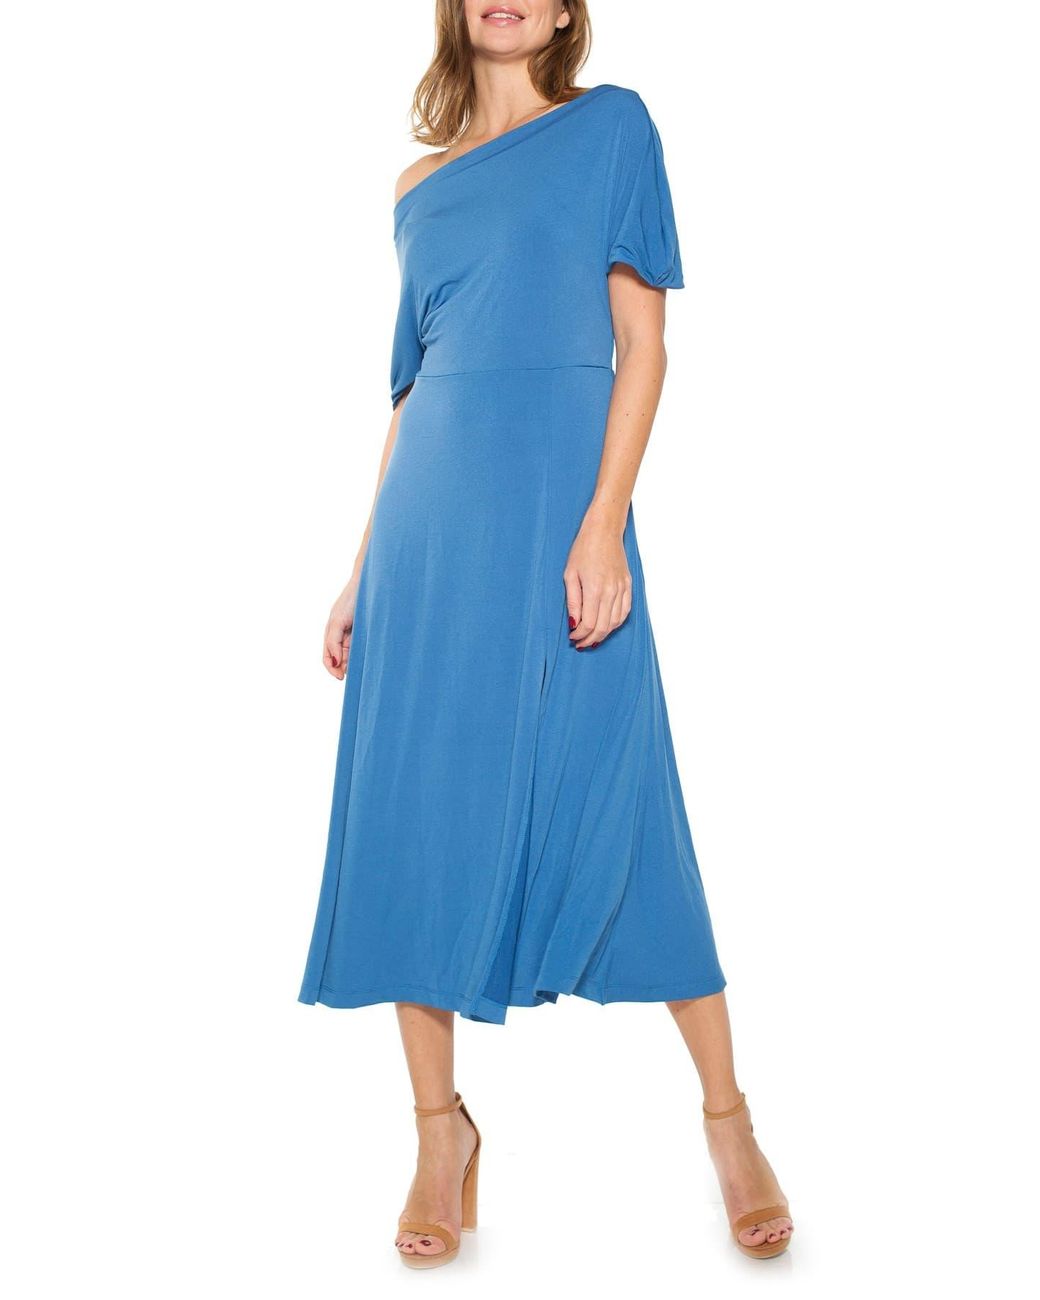 Alexia Admor Kaelyn Draped One Shoulder Floral Midi Dress in Denim Blue ...